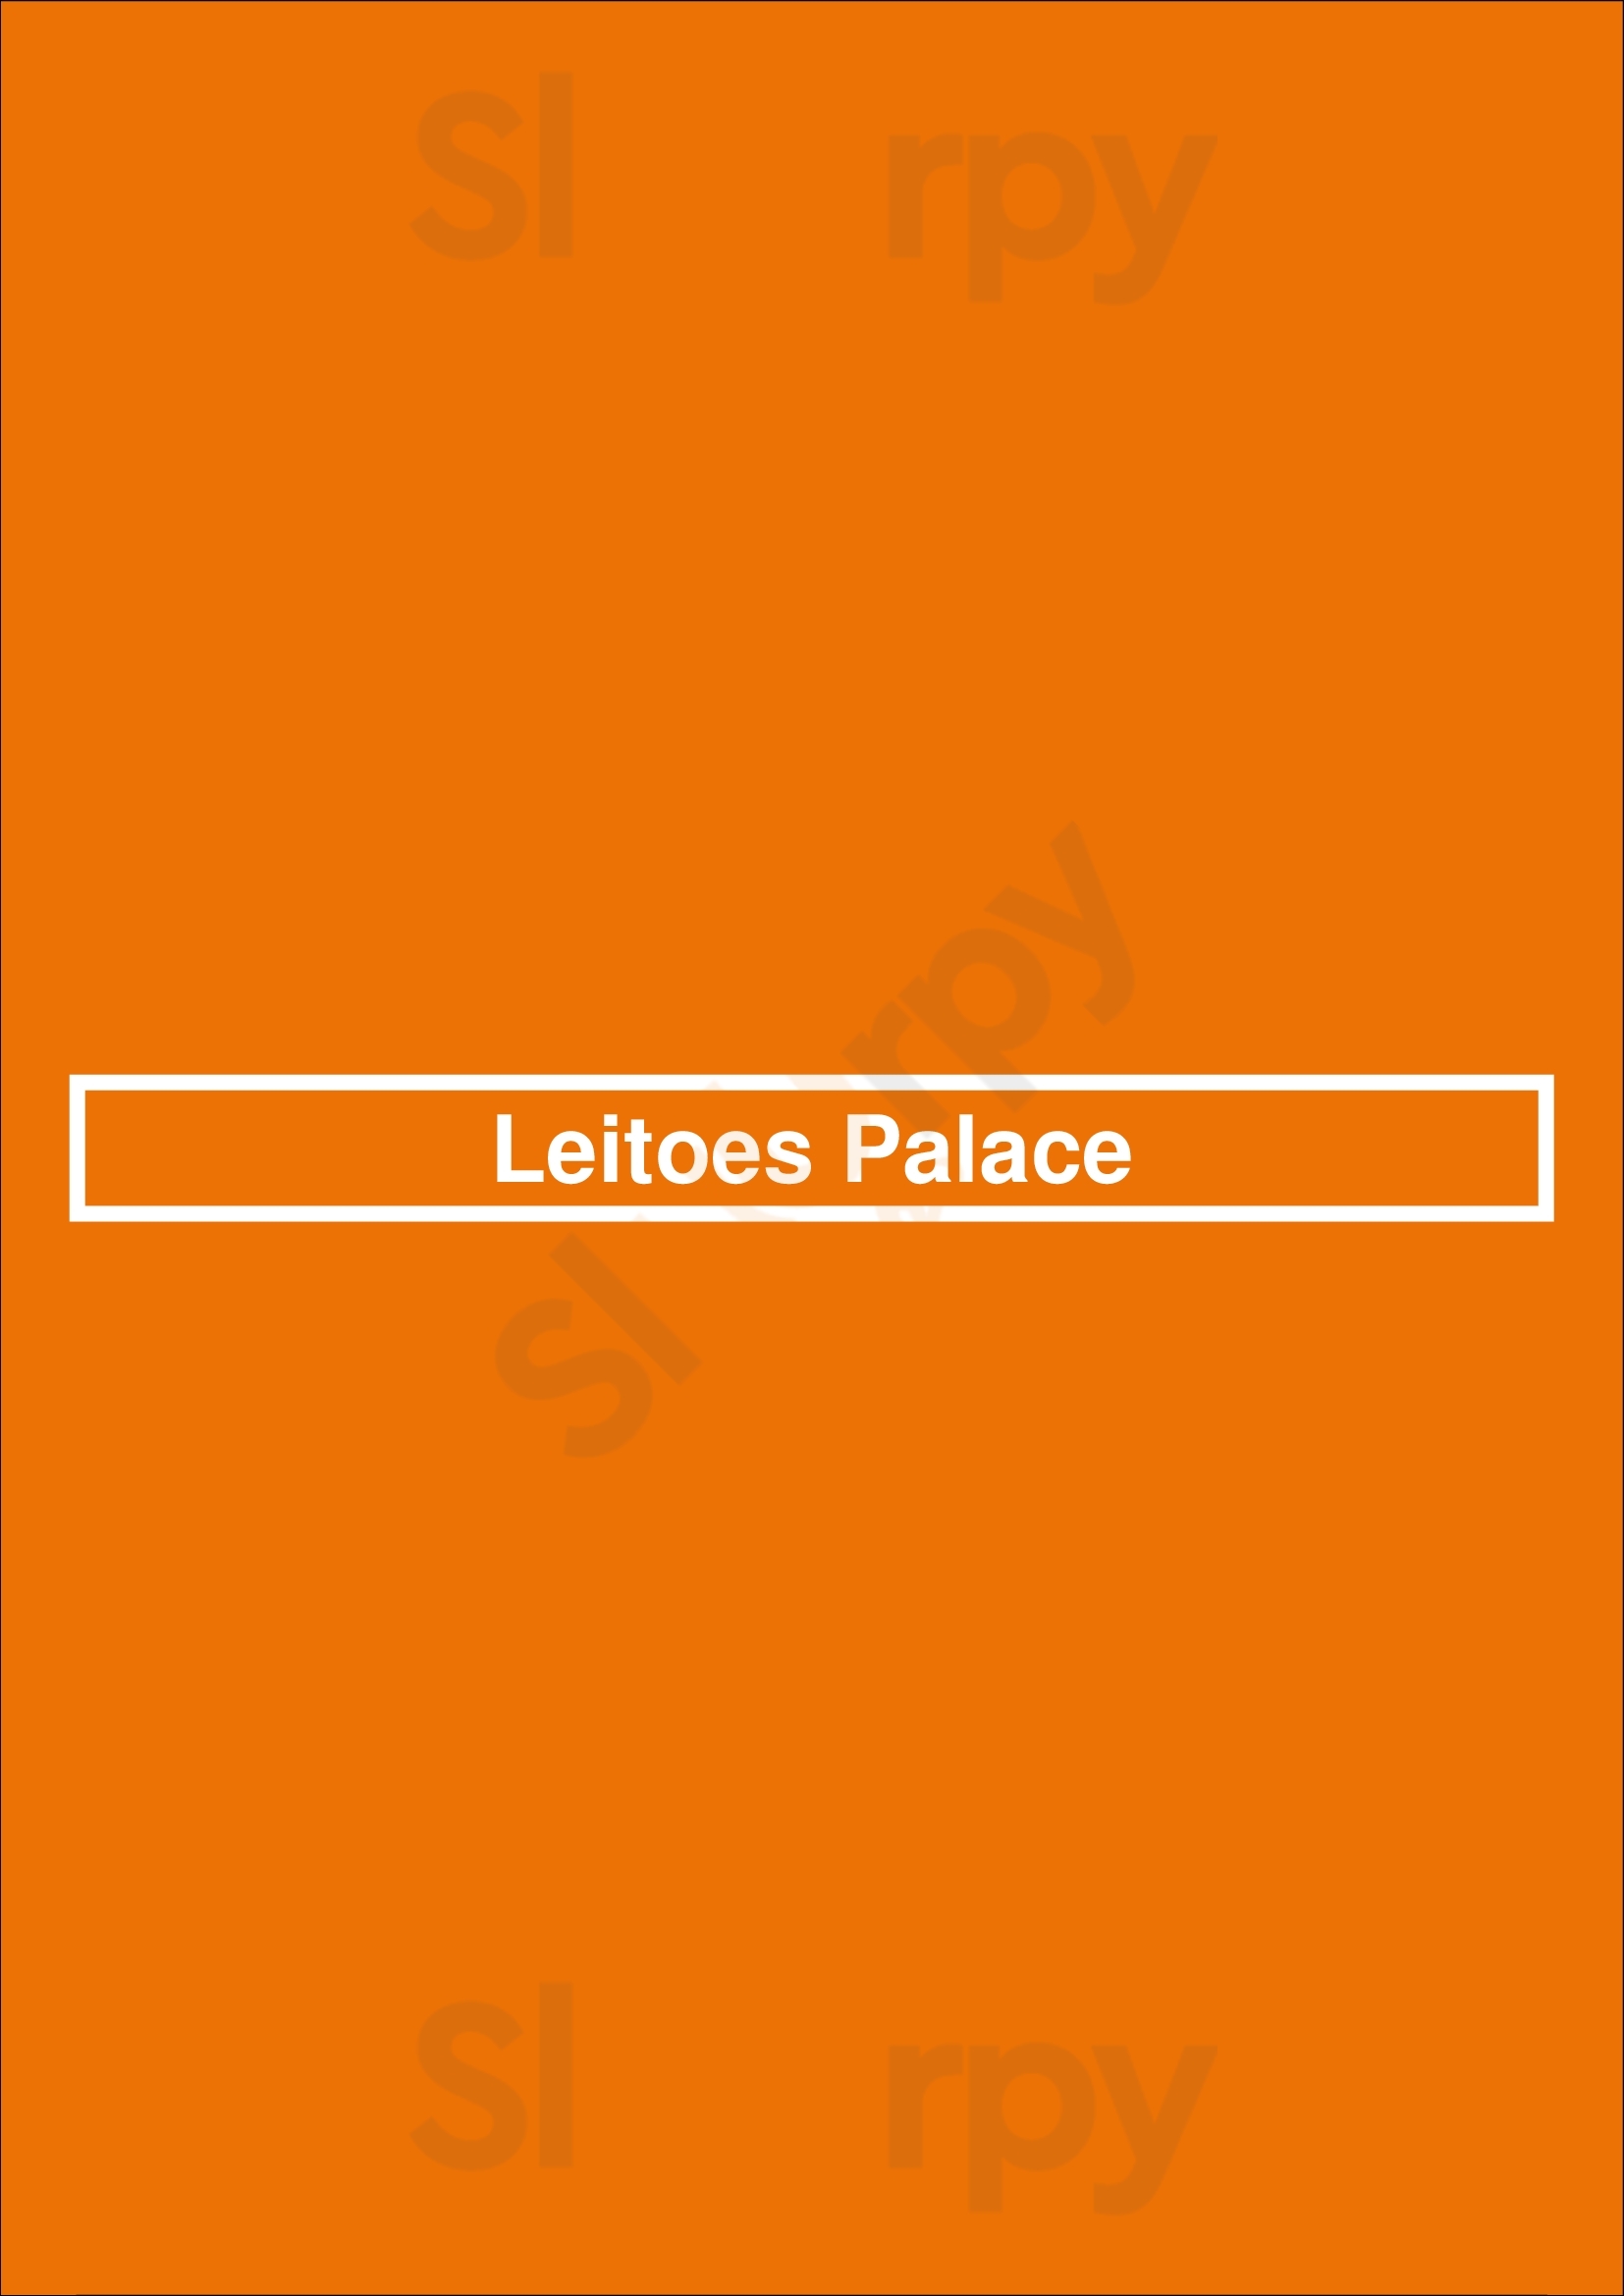 Leitoes Palace Porto Menu - 1